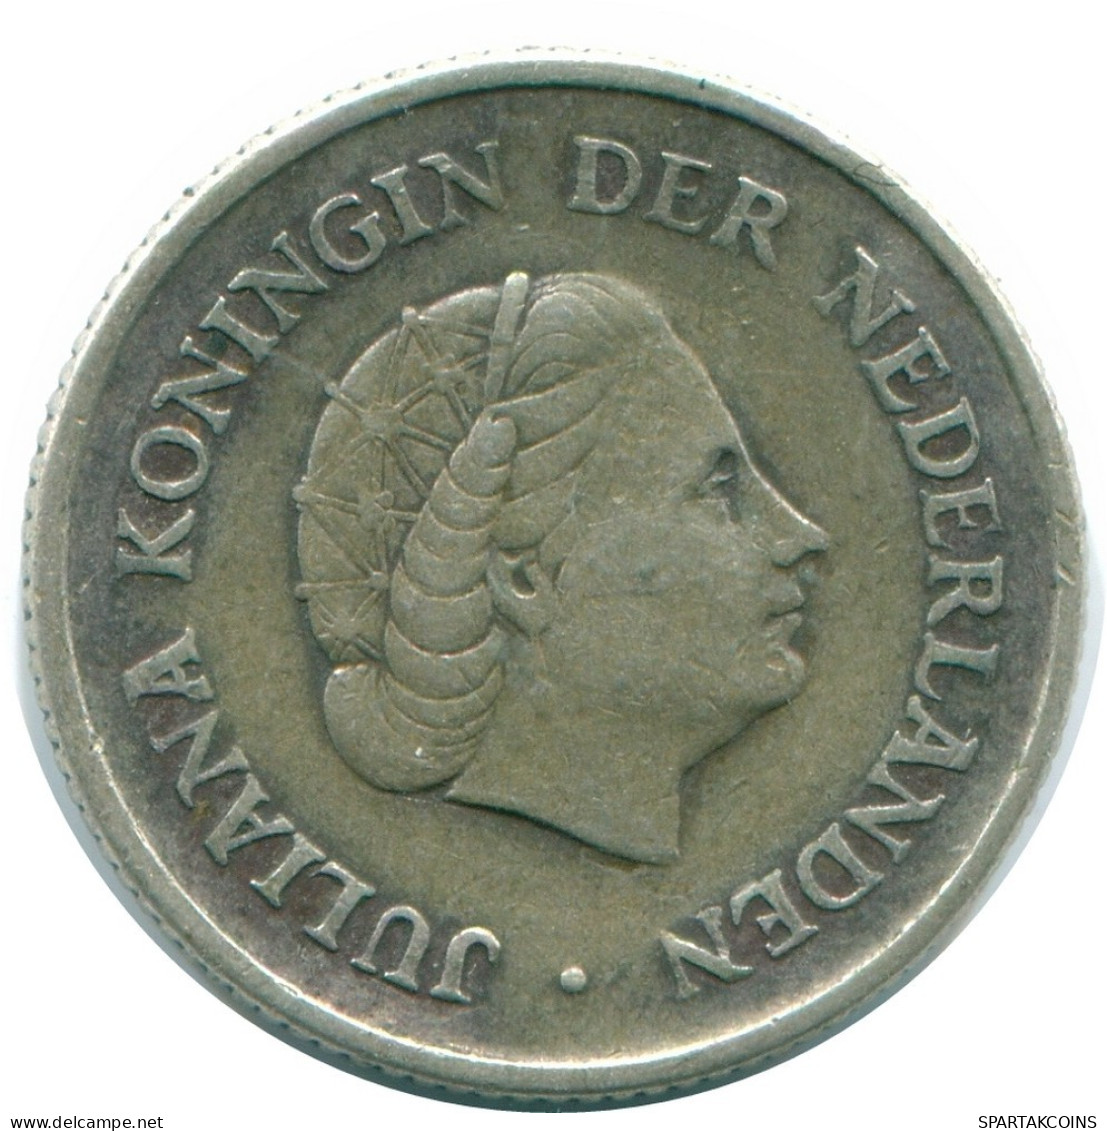 1/4 GULDEN 1965 NETHERLANDS ANTILLES SILVER Colonial Coin #NL11405.4.U.A - Netherlands Antilles